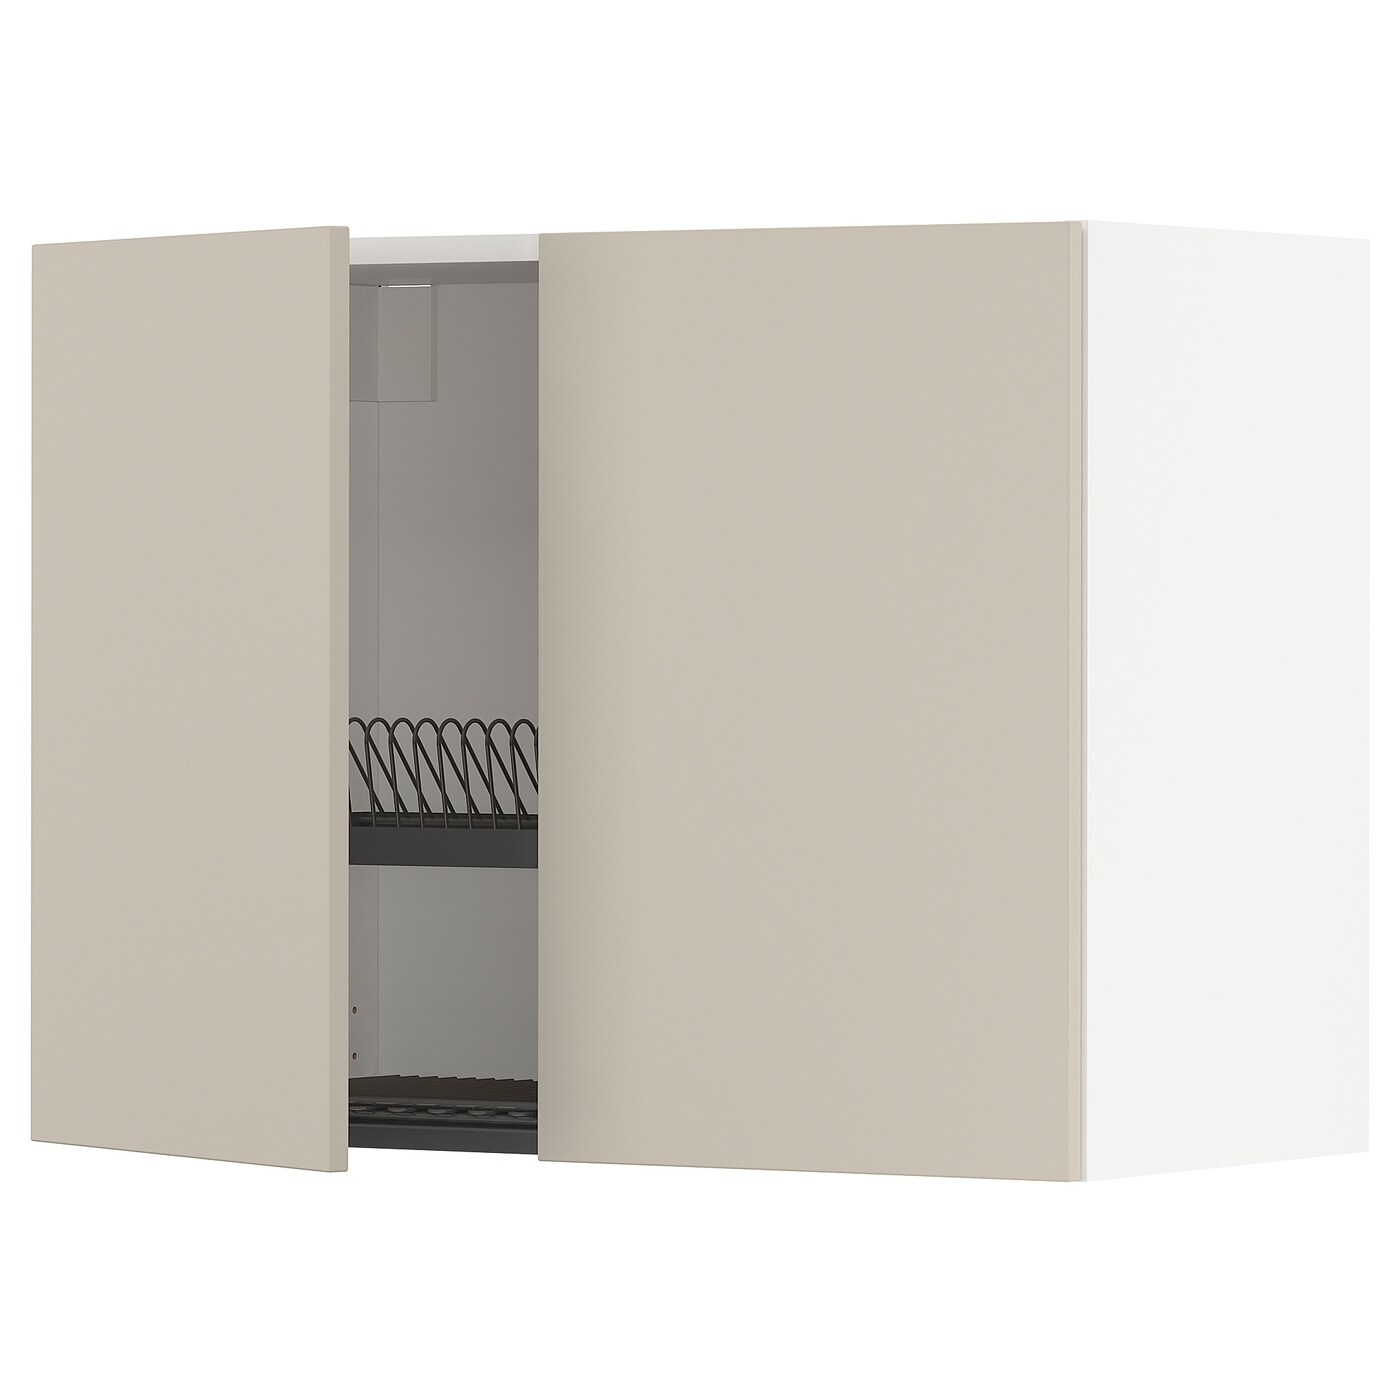 Навесной шкаф с сушилкой - METOD IKEA/ МЕТОД ИКЕА, 60х80 см, белый/бежевый